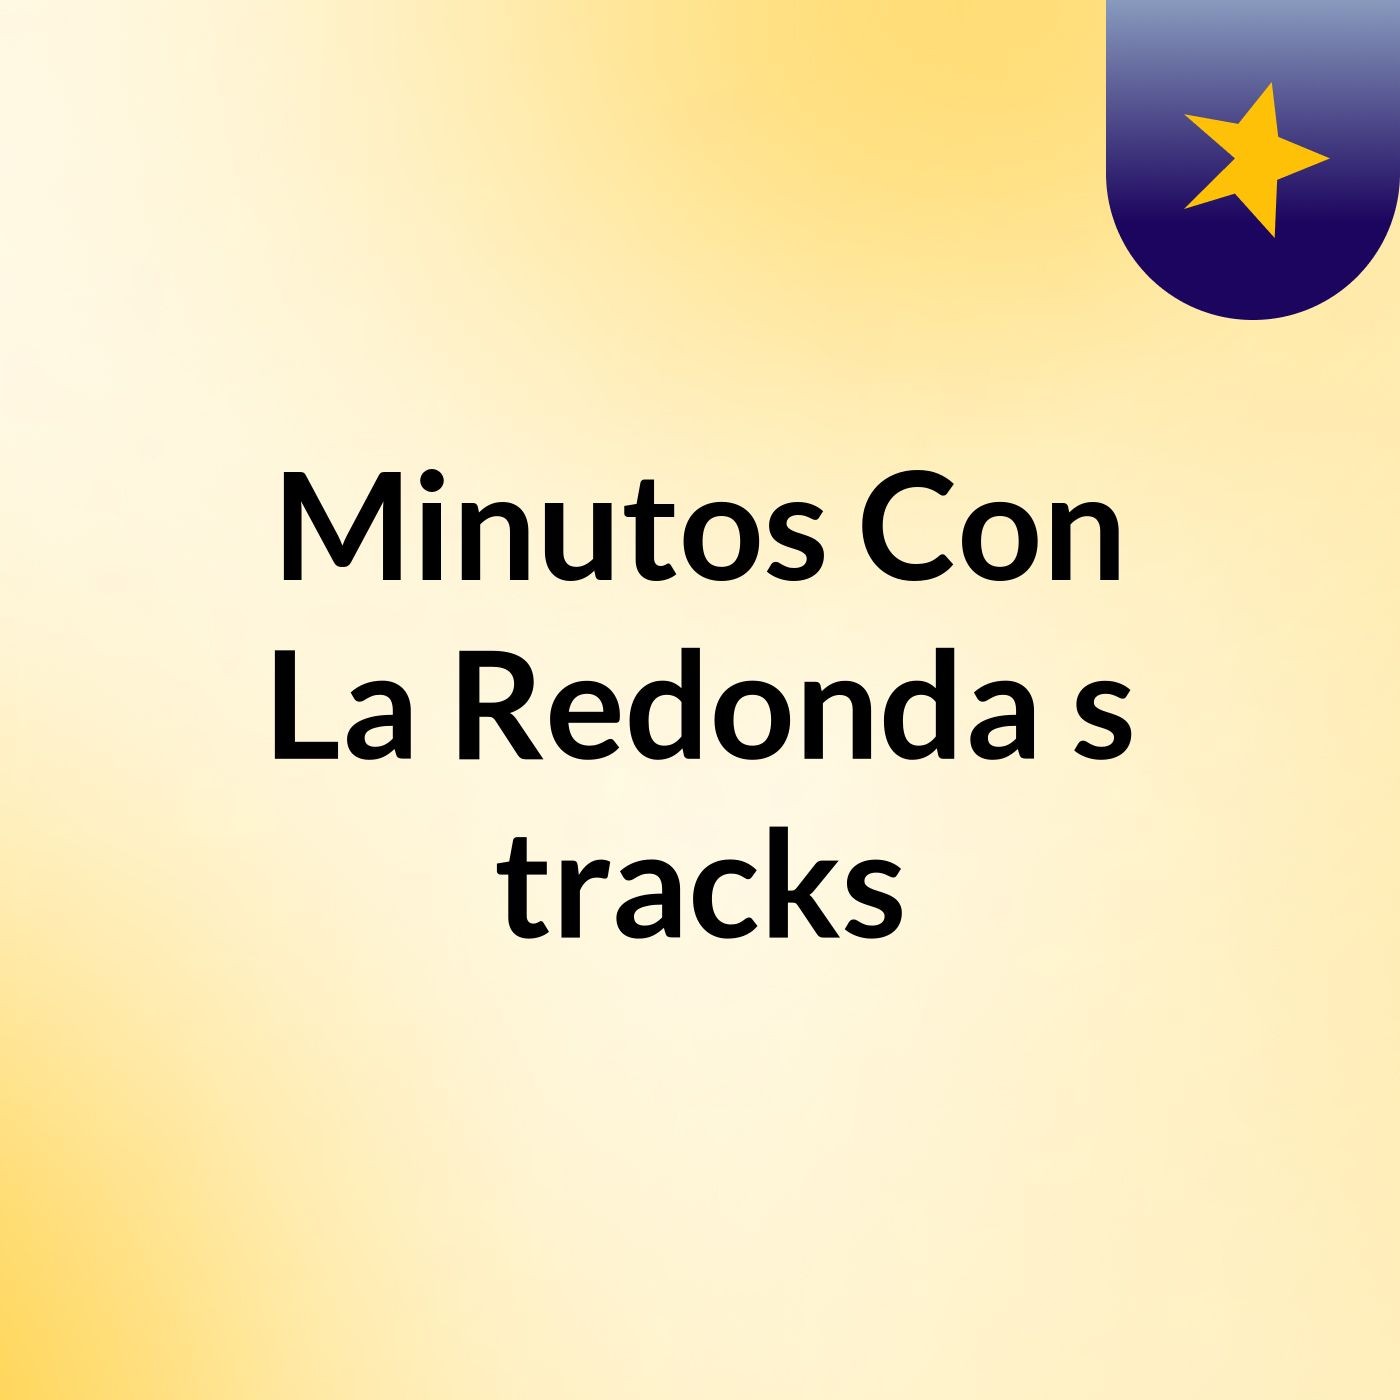 Minutos Con La Redonda's tracks